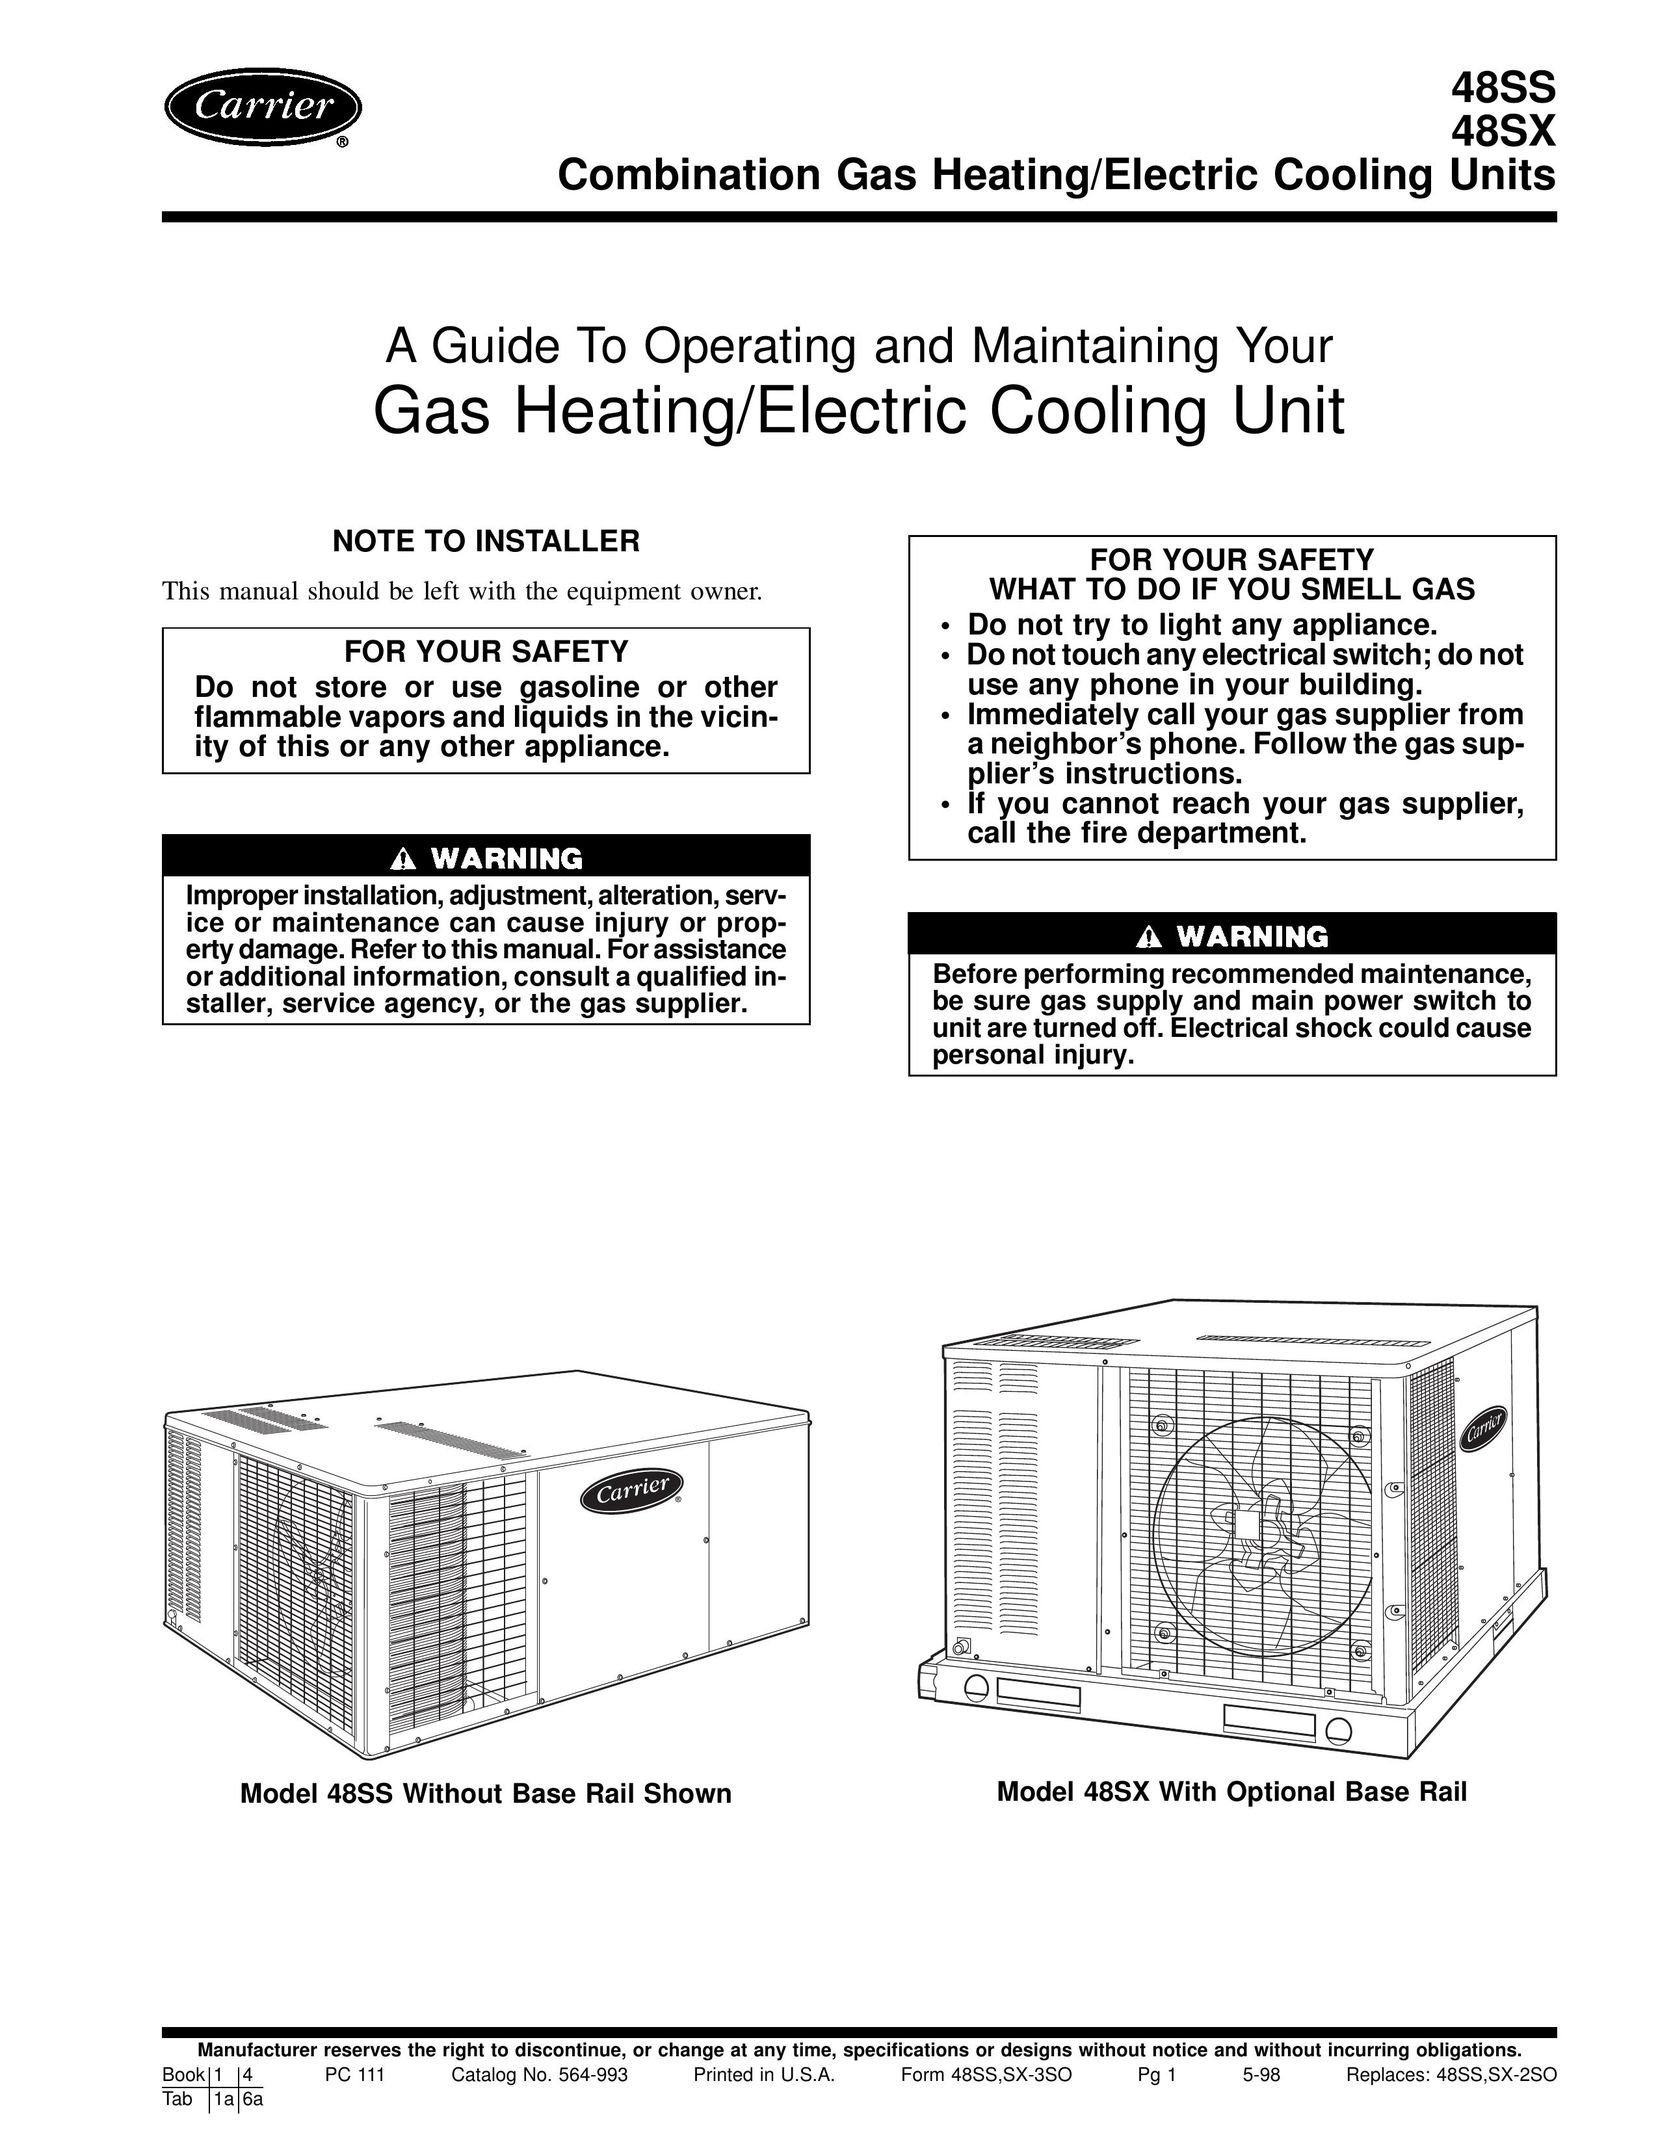 Carrier 48SX Gas Heater User Manual